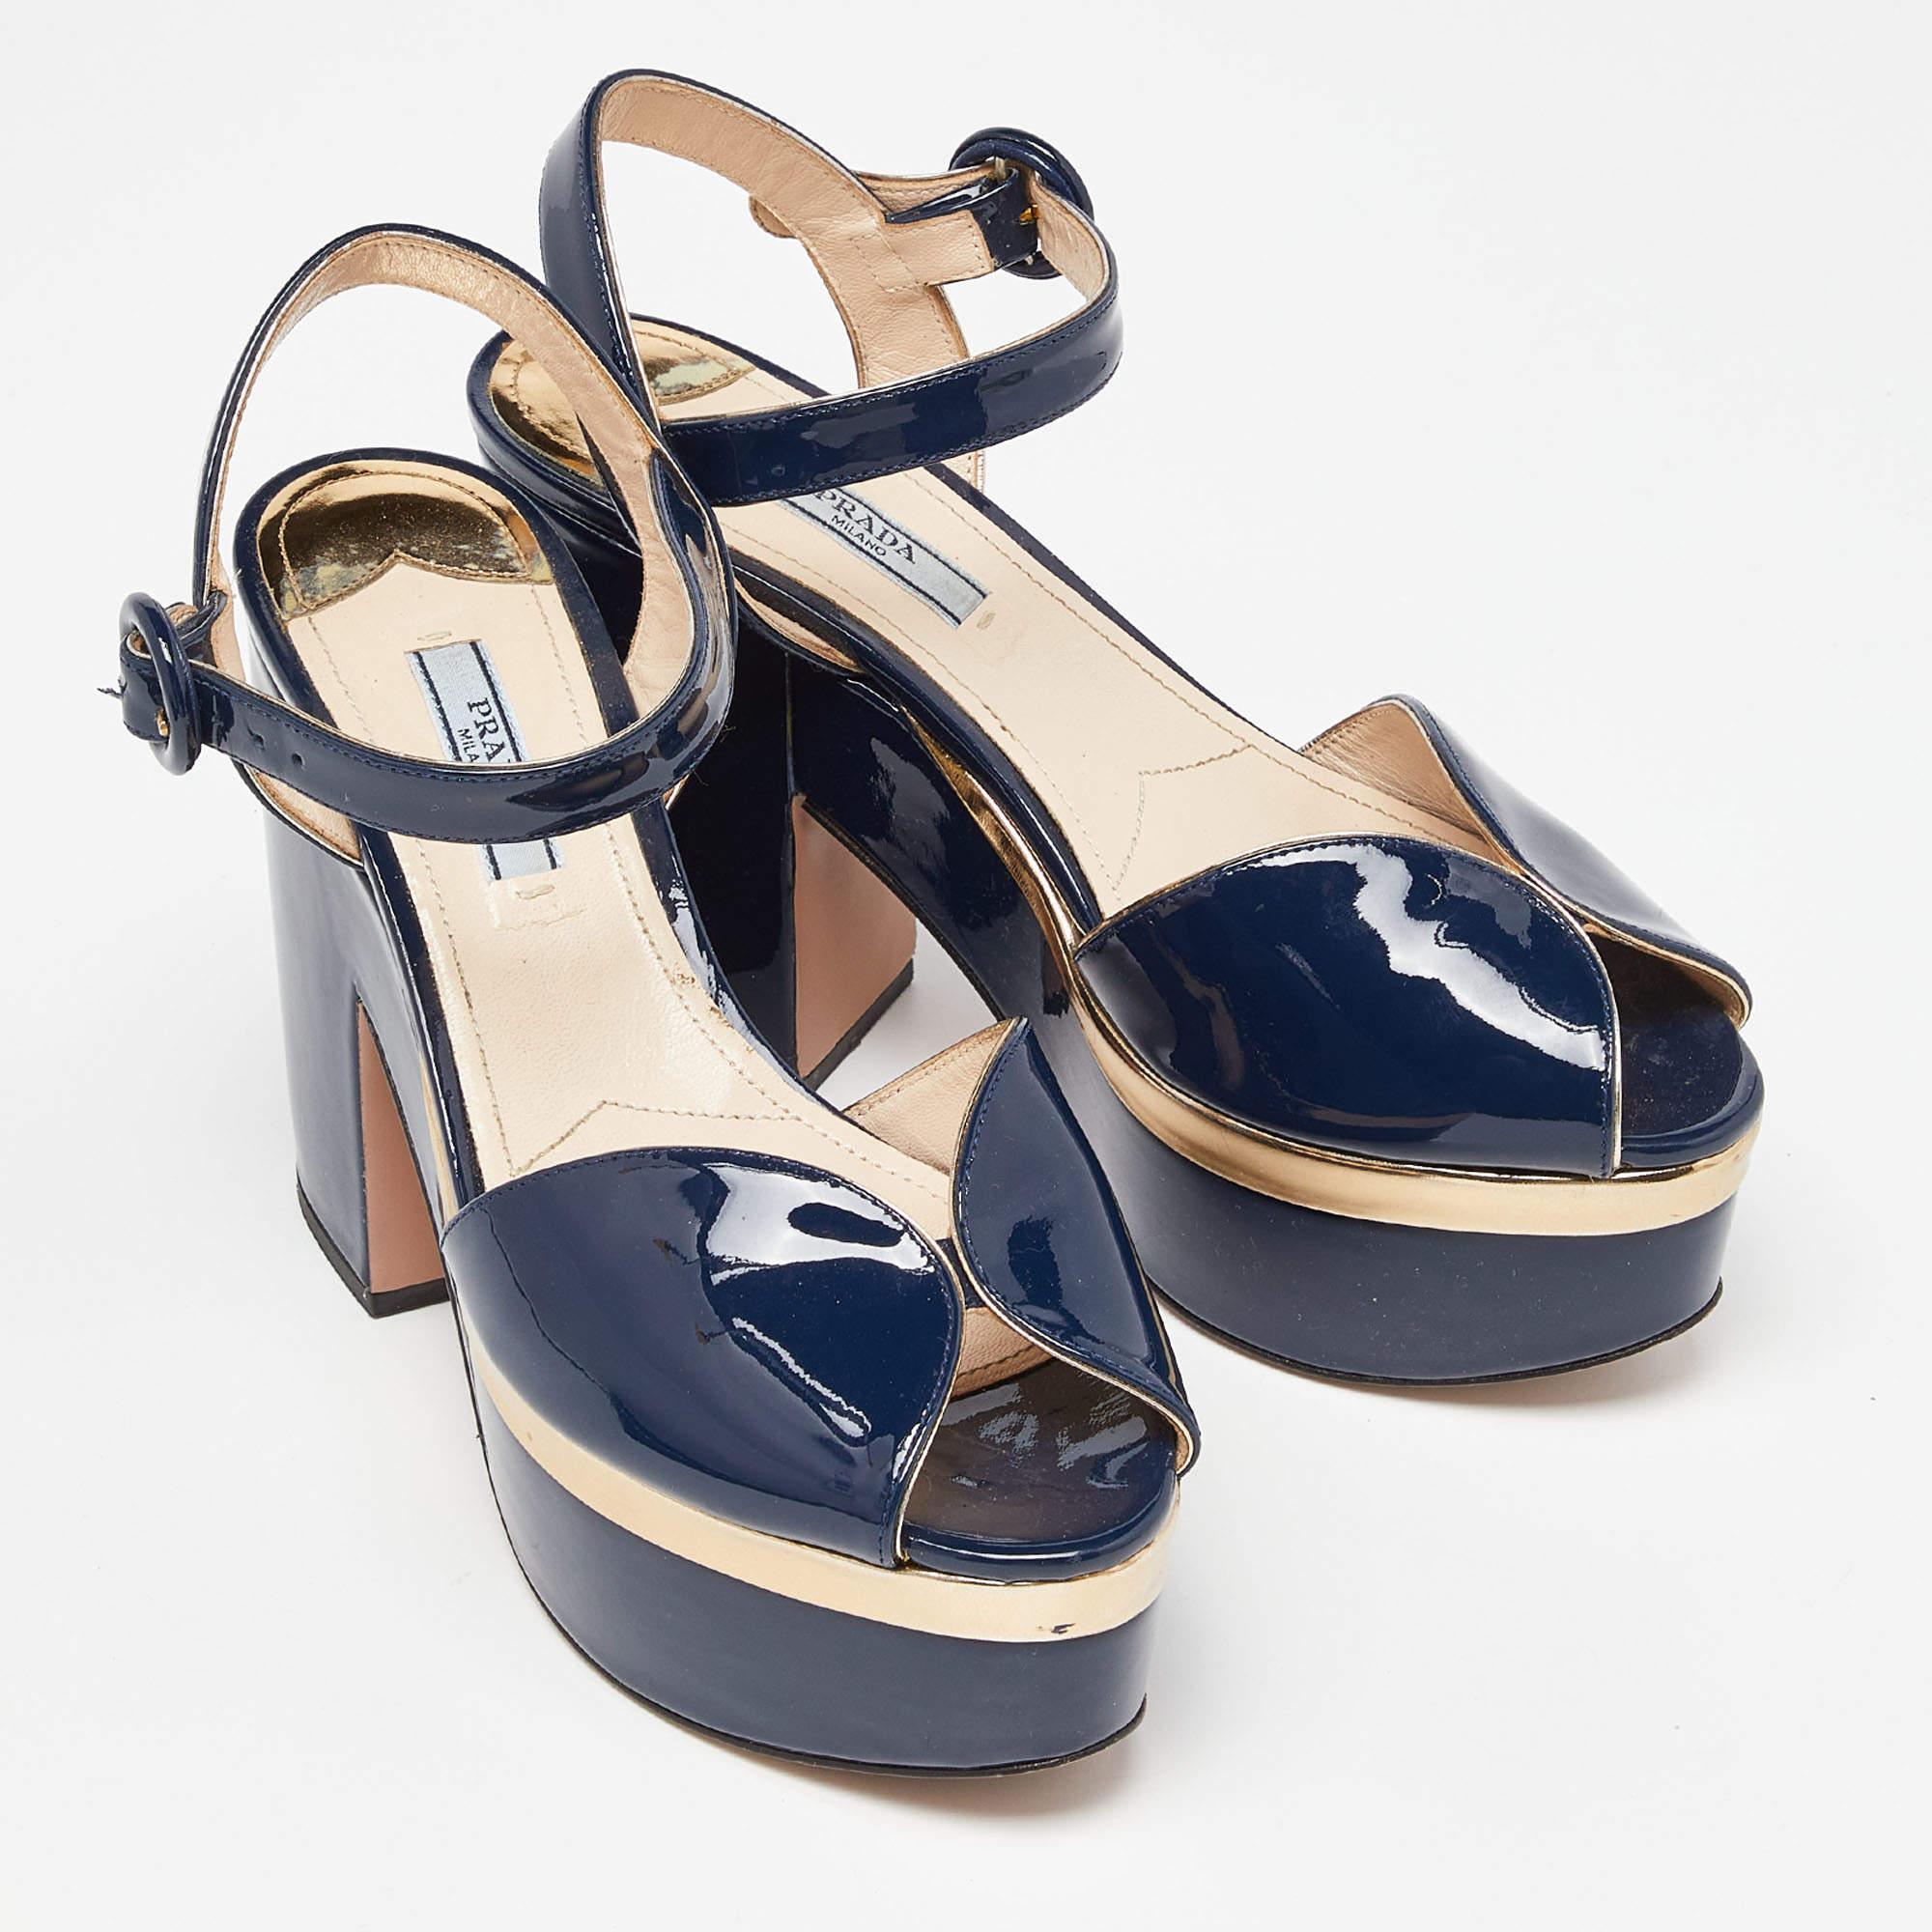 Prada Navy Blue Patent Leather Platform Ankle Strap Sandals Size 38.5 1